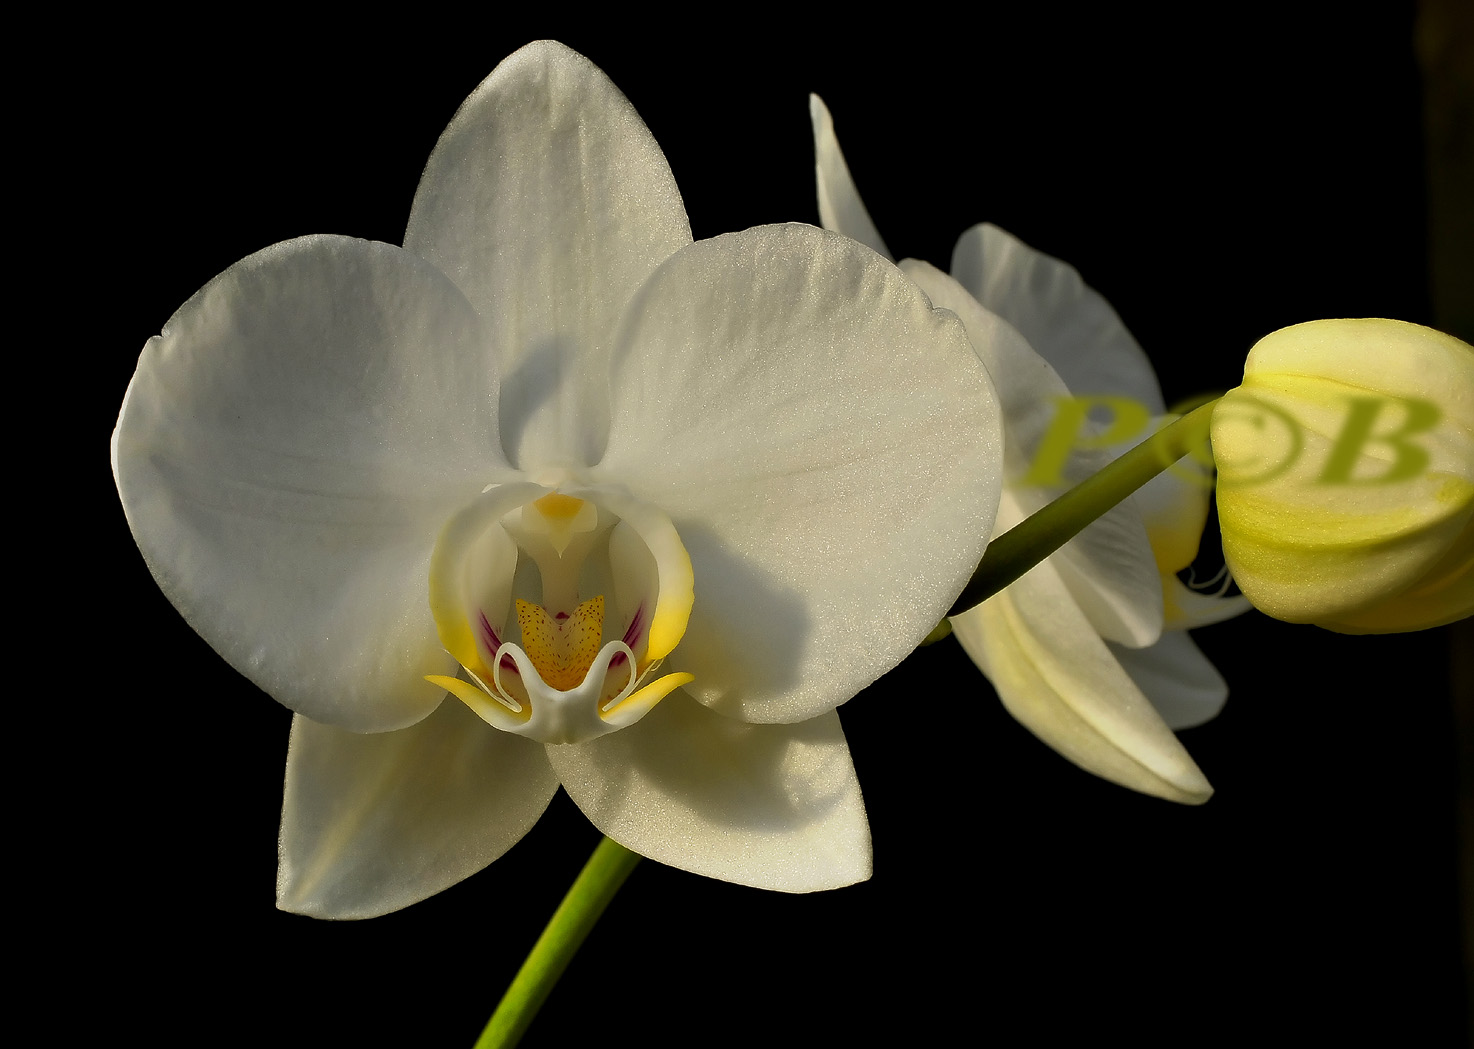 Phalaenopsis aphrodite ssp. formosana, one of the ancestors of the big white hybrids